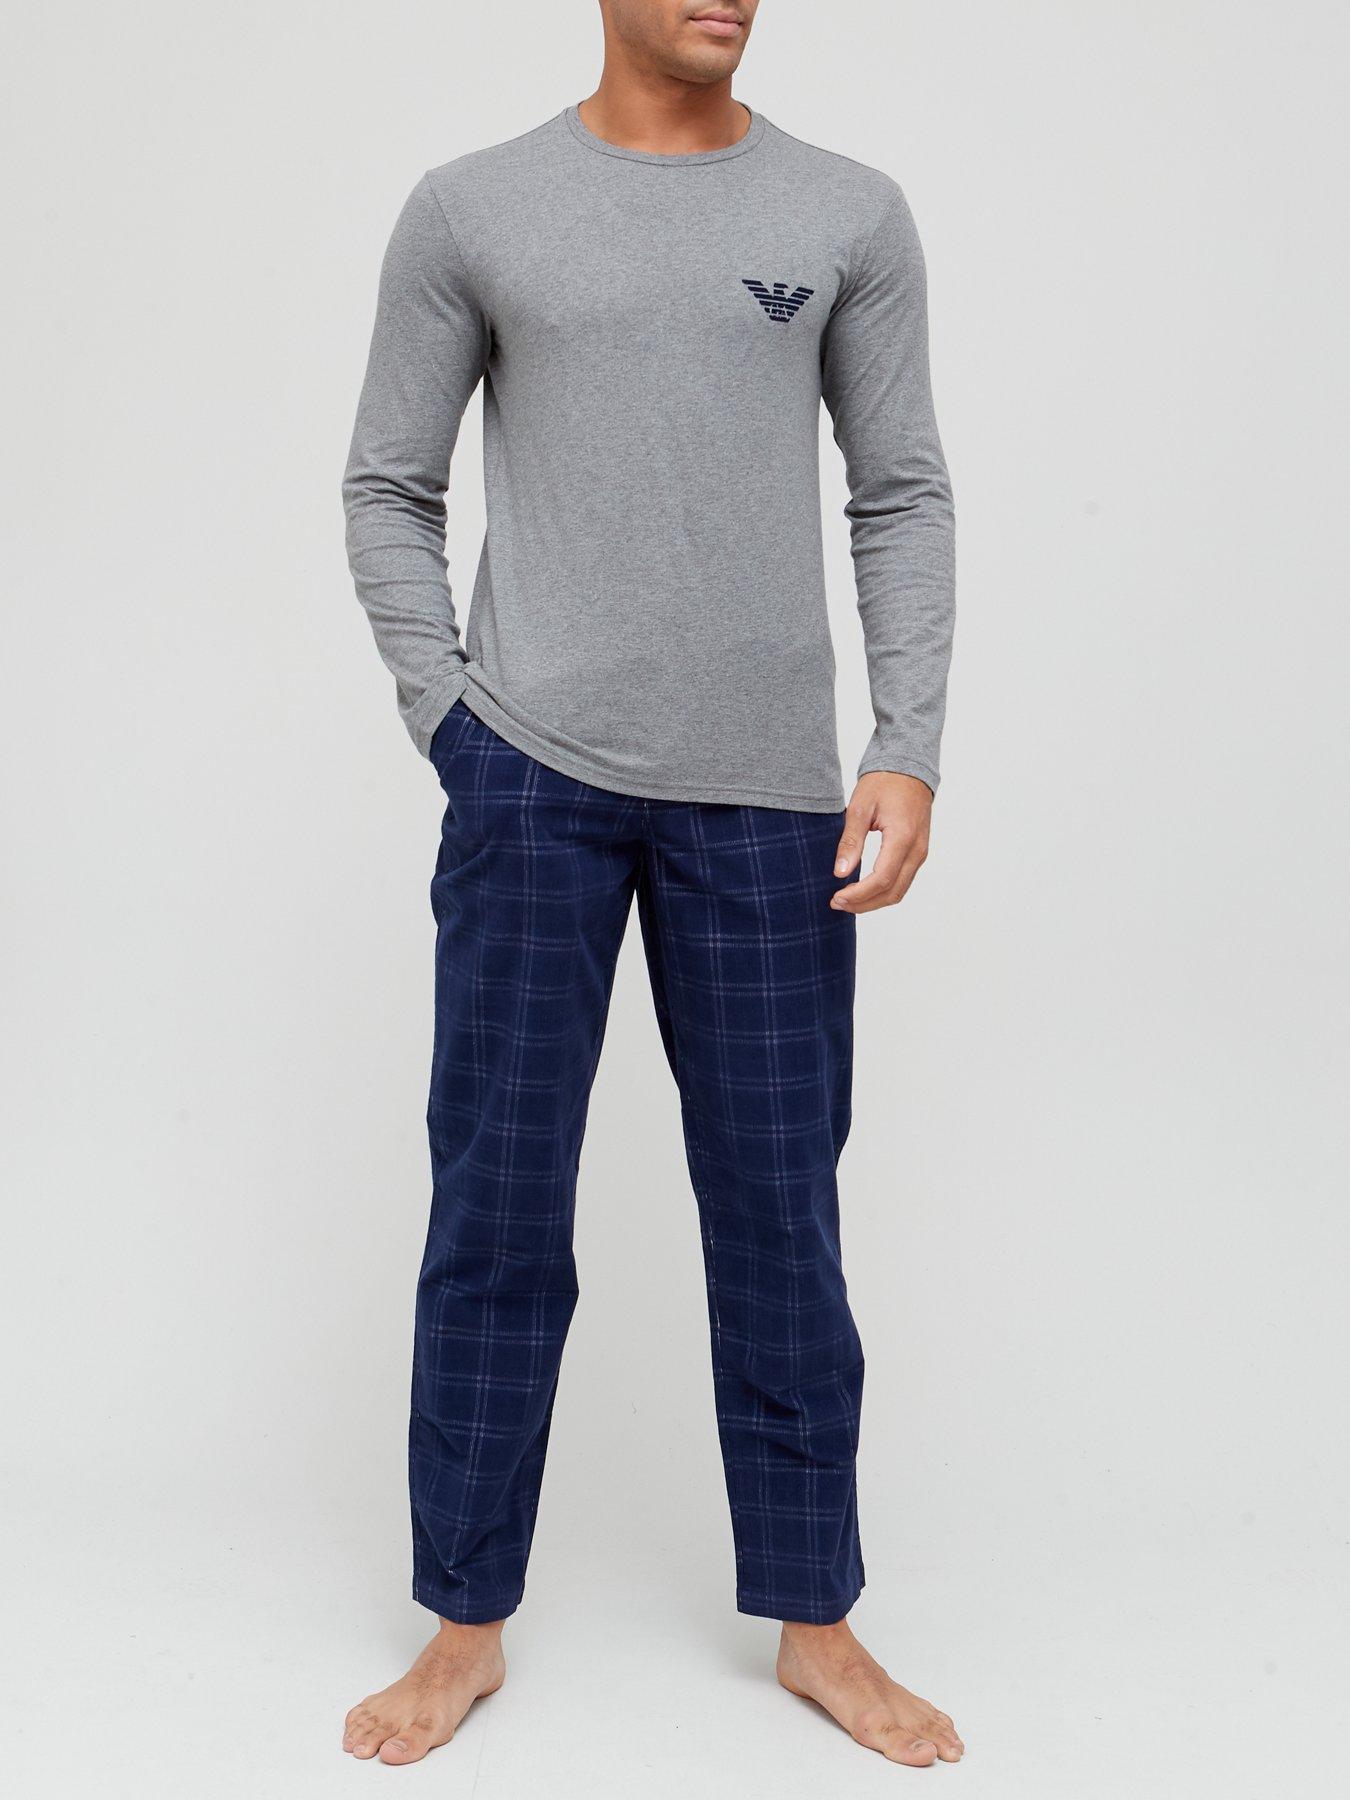 Nightwear & Loungewear Check Flannel Christmas Pyjama Set - Grey/Navy